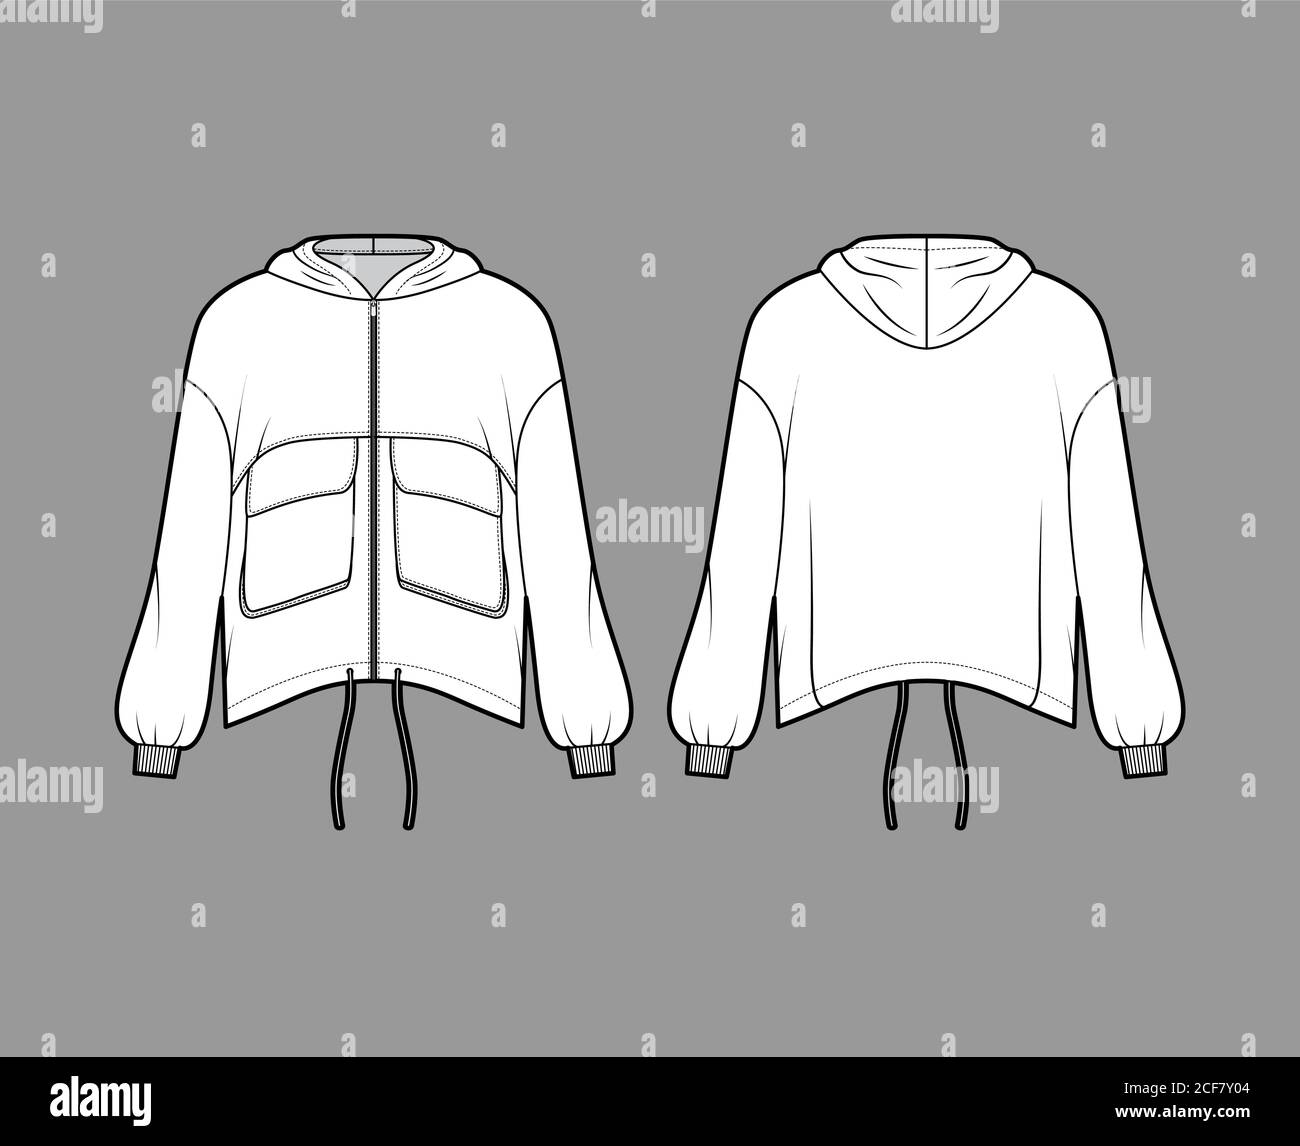 Paneled jacket Stock Vector Images - Alamy